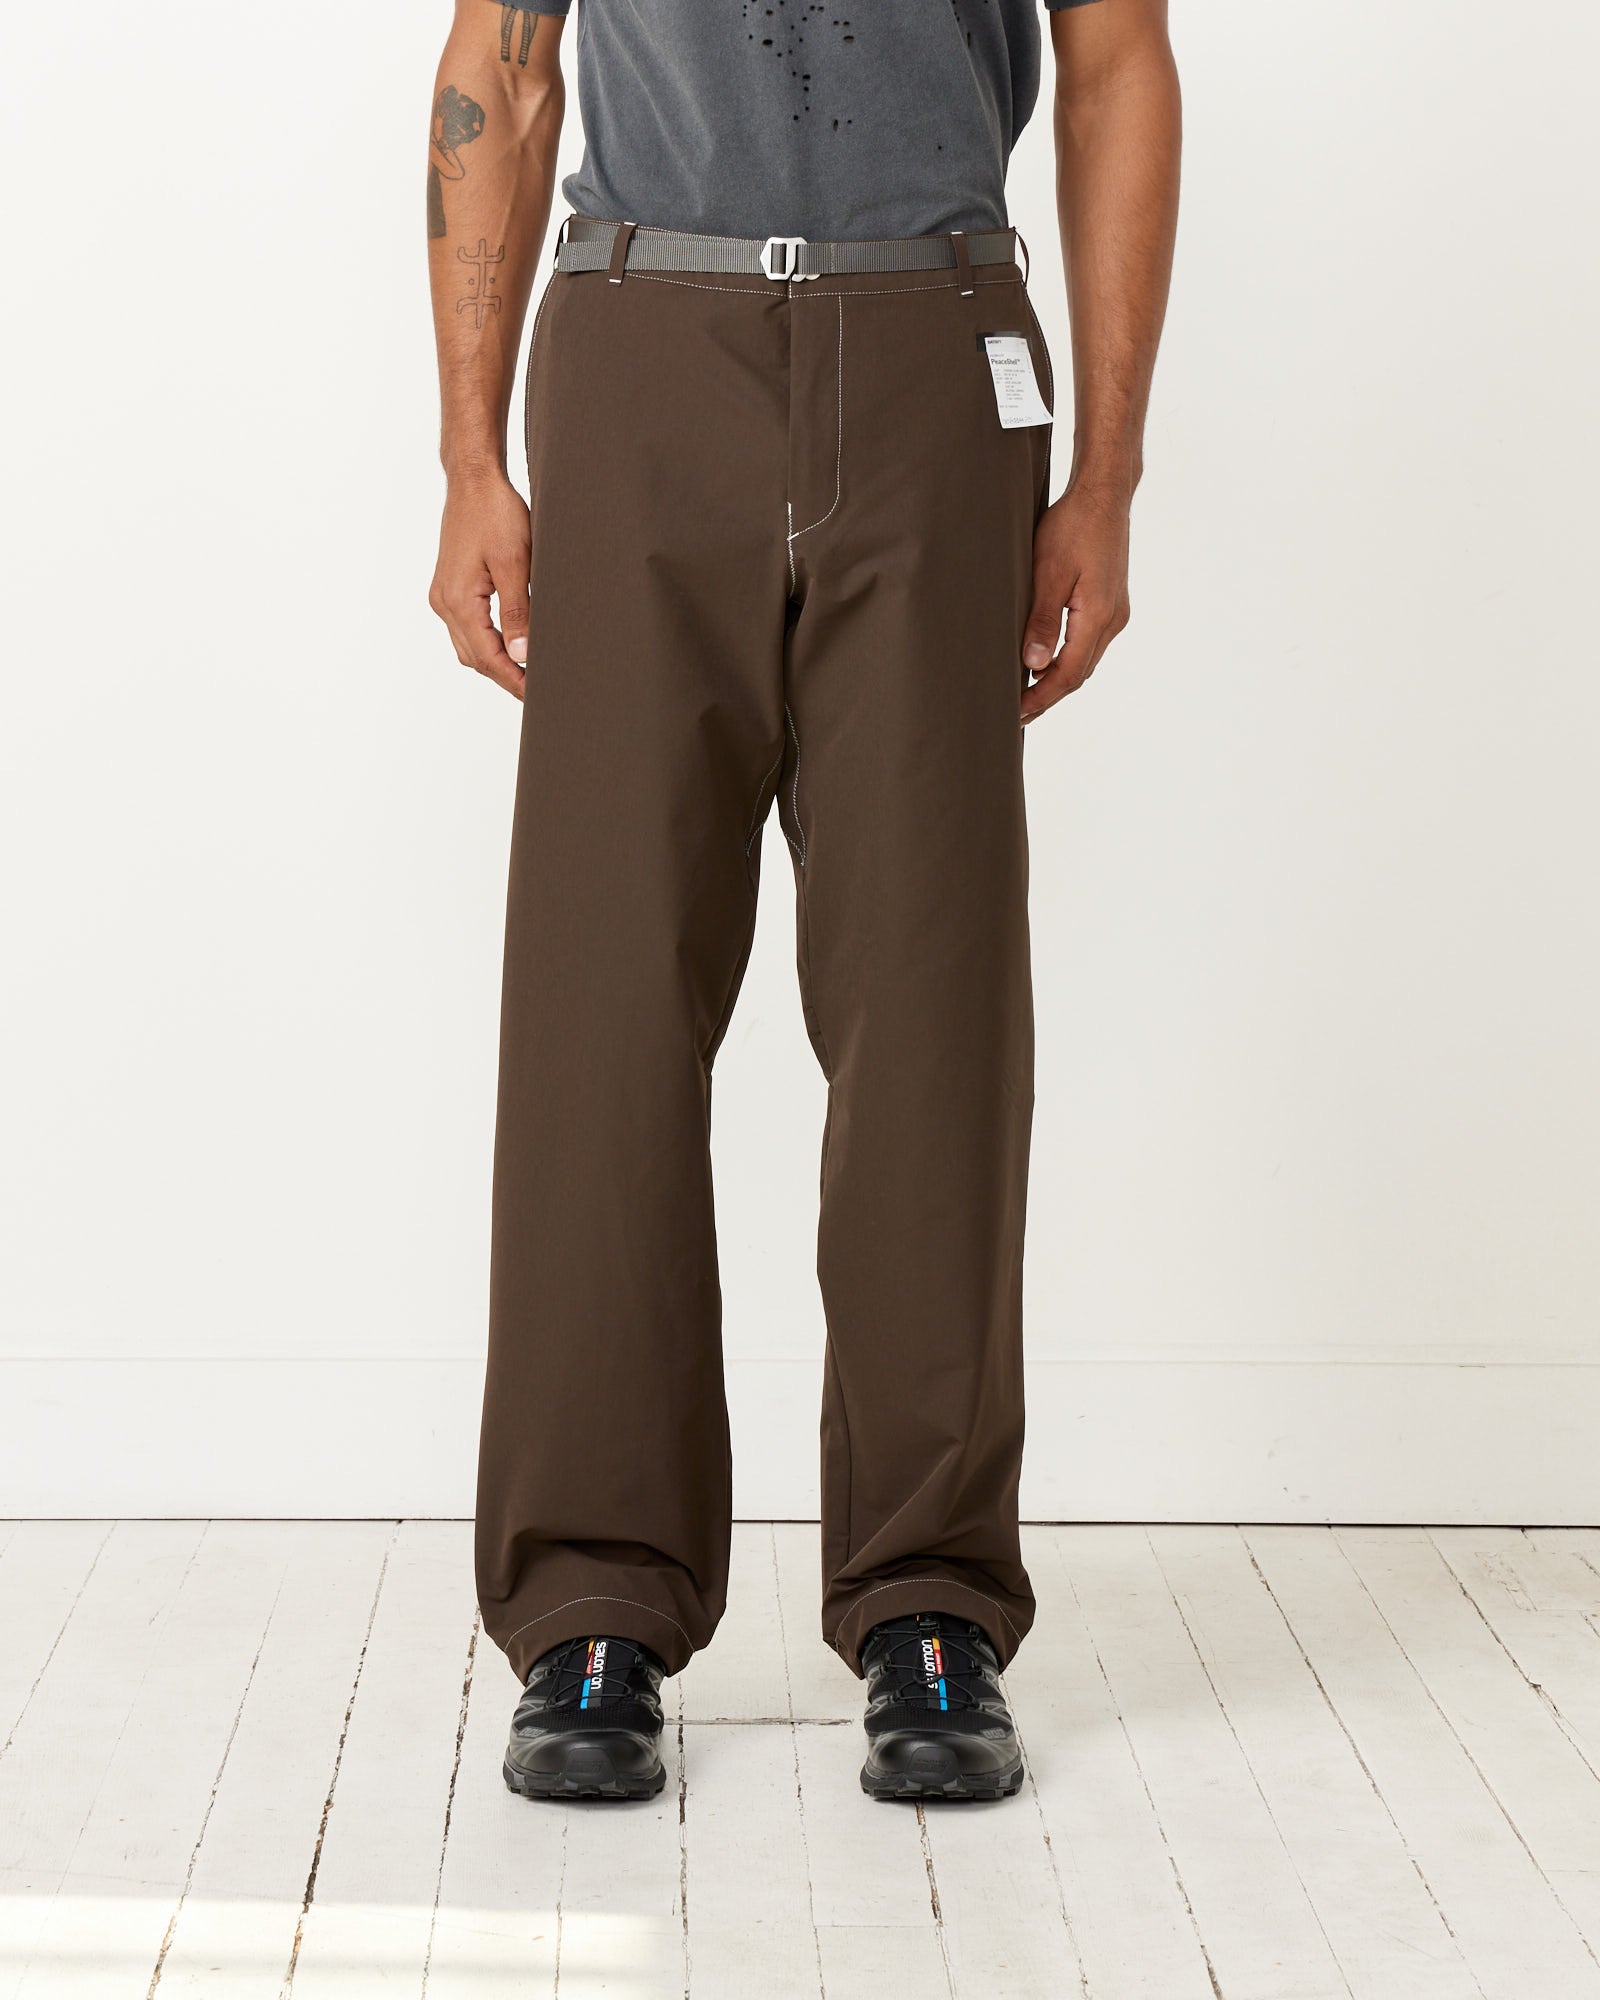 PeaceShell Standard Climb Pants in Brown